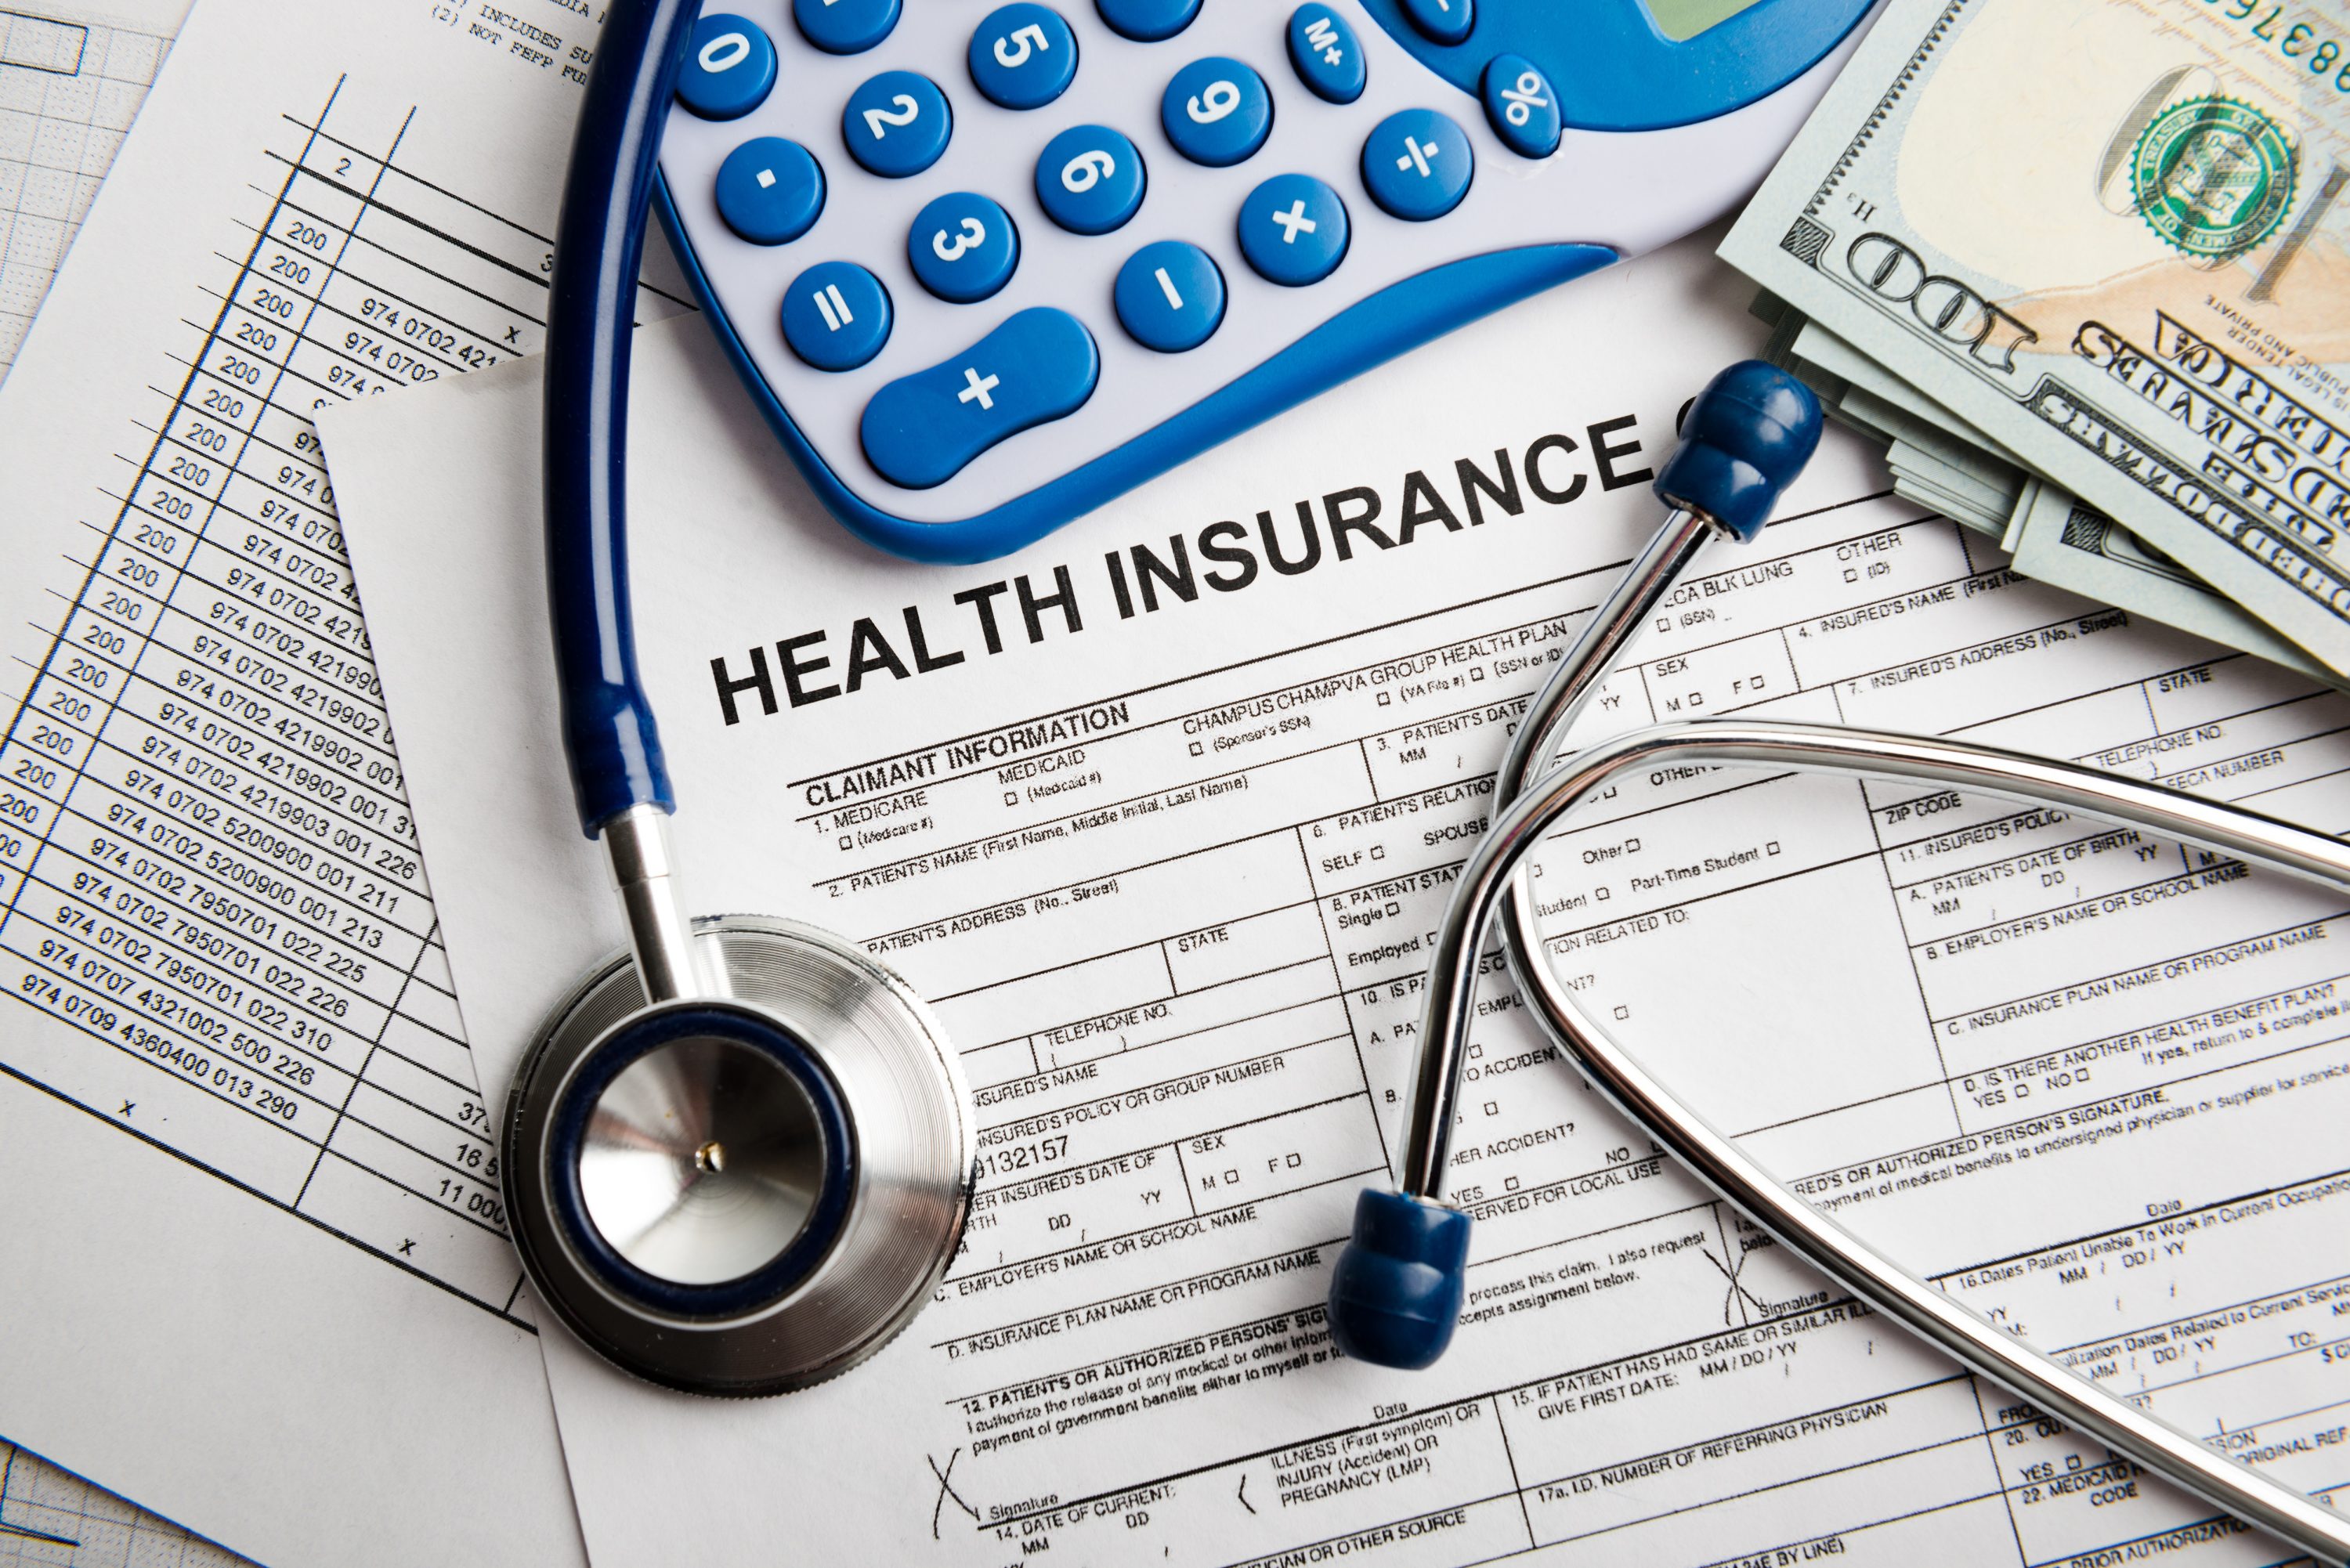 Health insurance paperwork. (Shutterstock Photo)